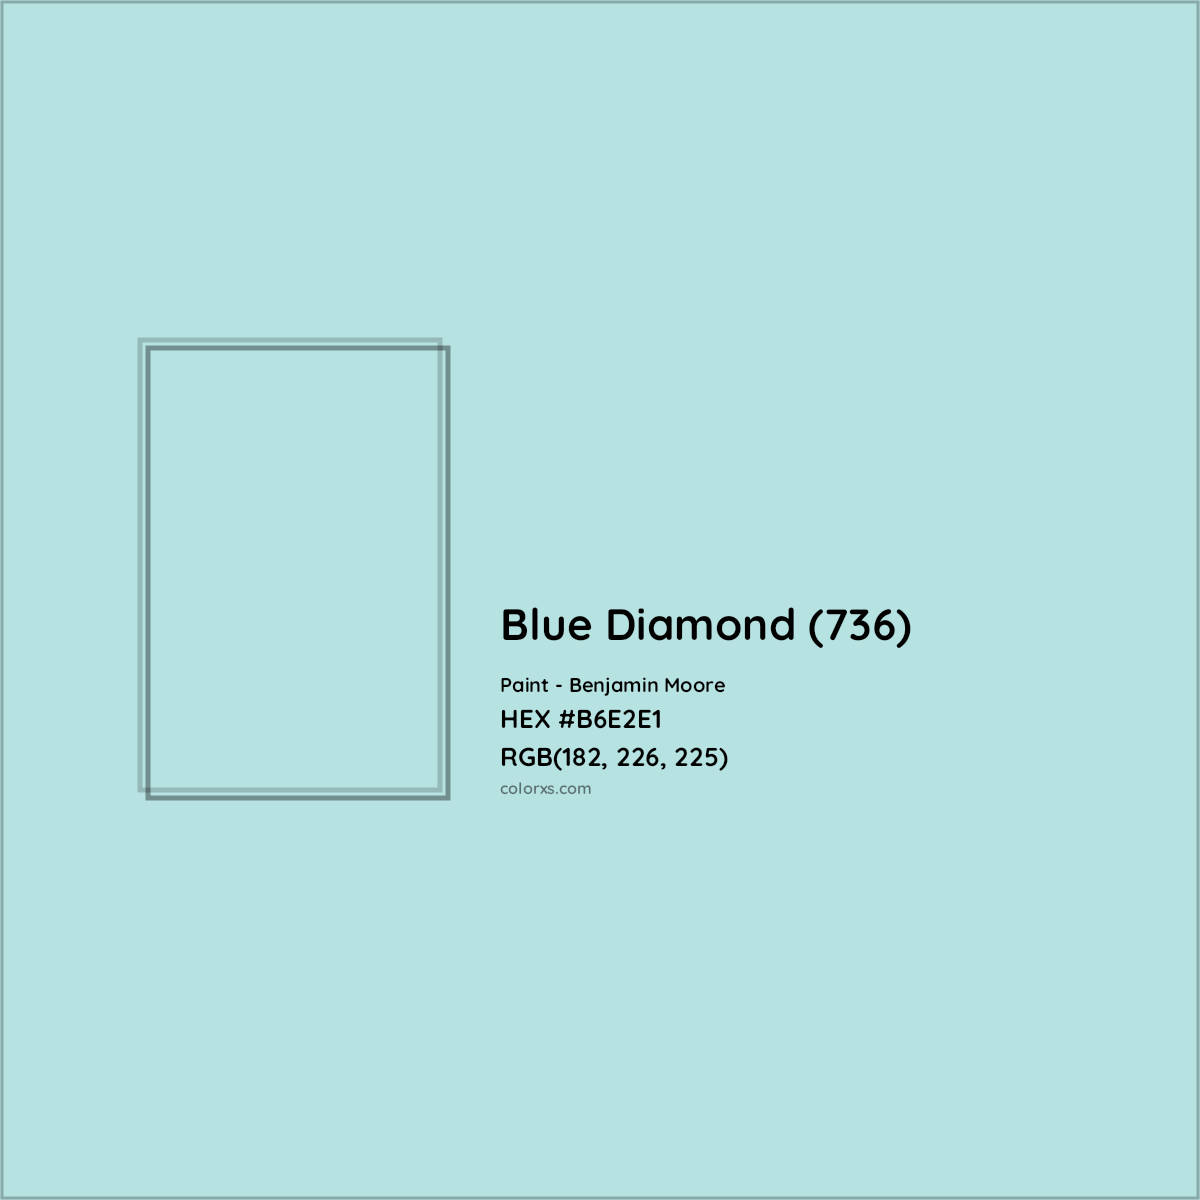 HEX #B6E2E1 Blue Diamond (736) Paint Benjamin Moore - Color Code